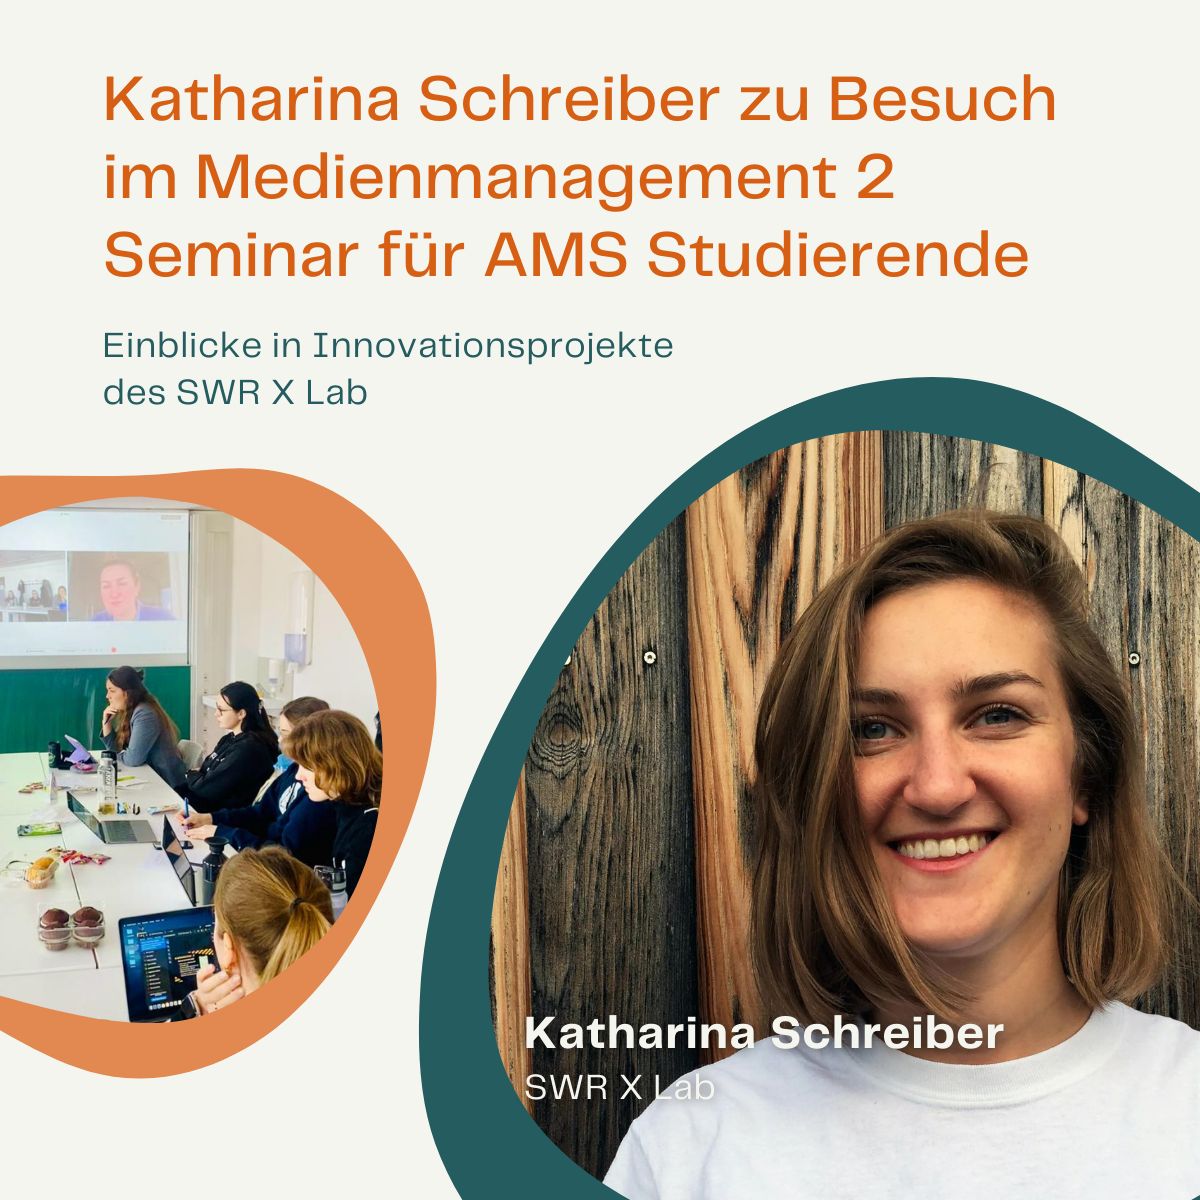 Katharina Schreiber from SWR X Lab visits Media Management 2 seminar